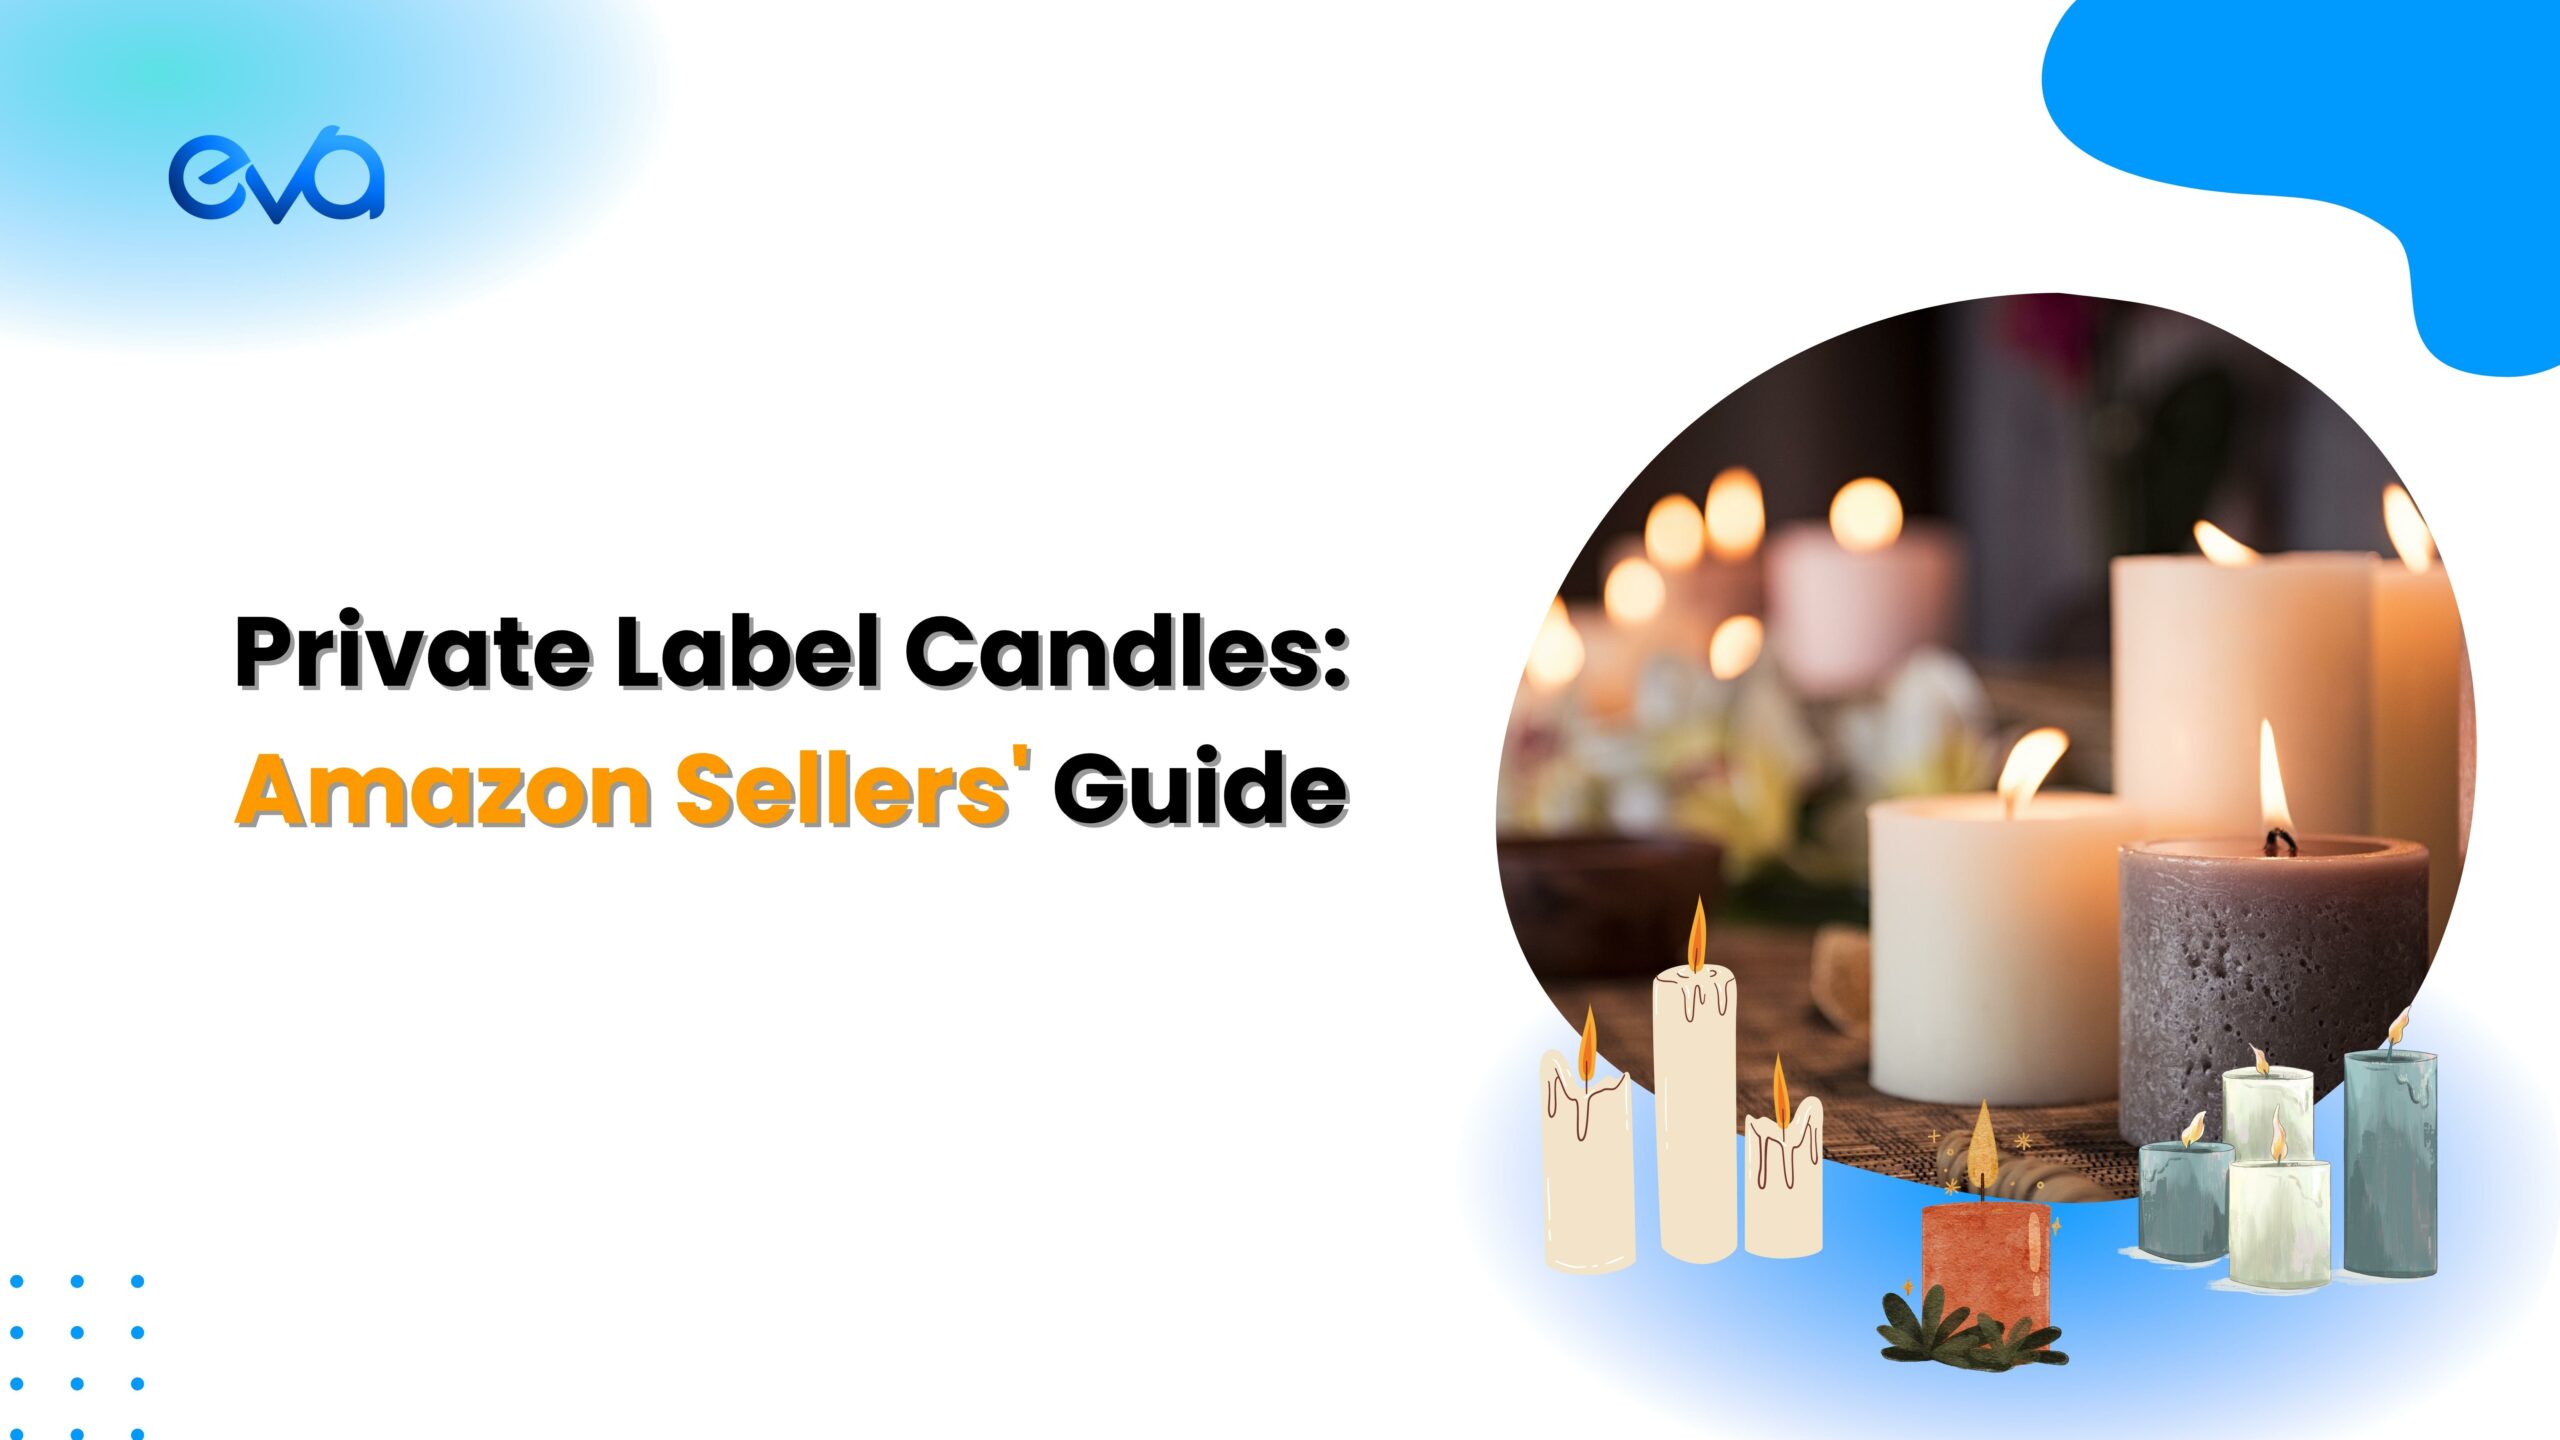 Bulk Soy Candles Wholesale  Custom Label & Scent Design Services